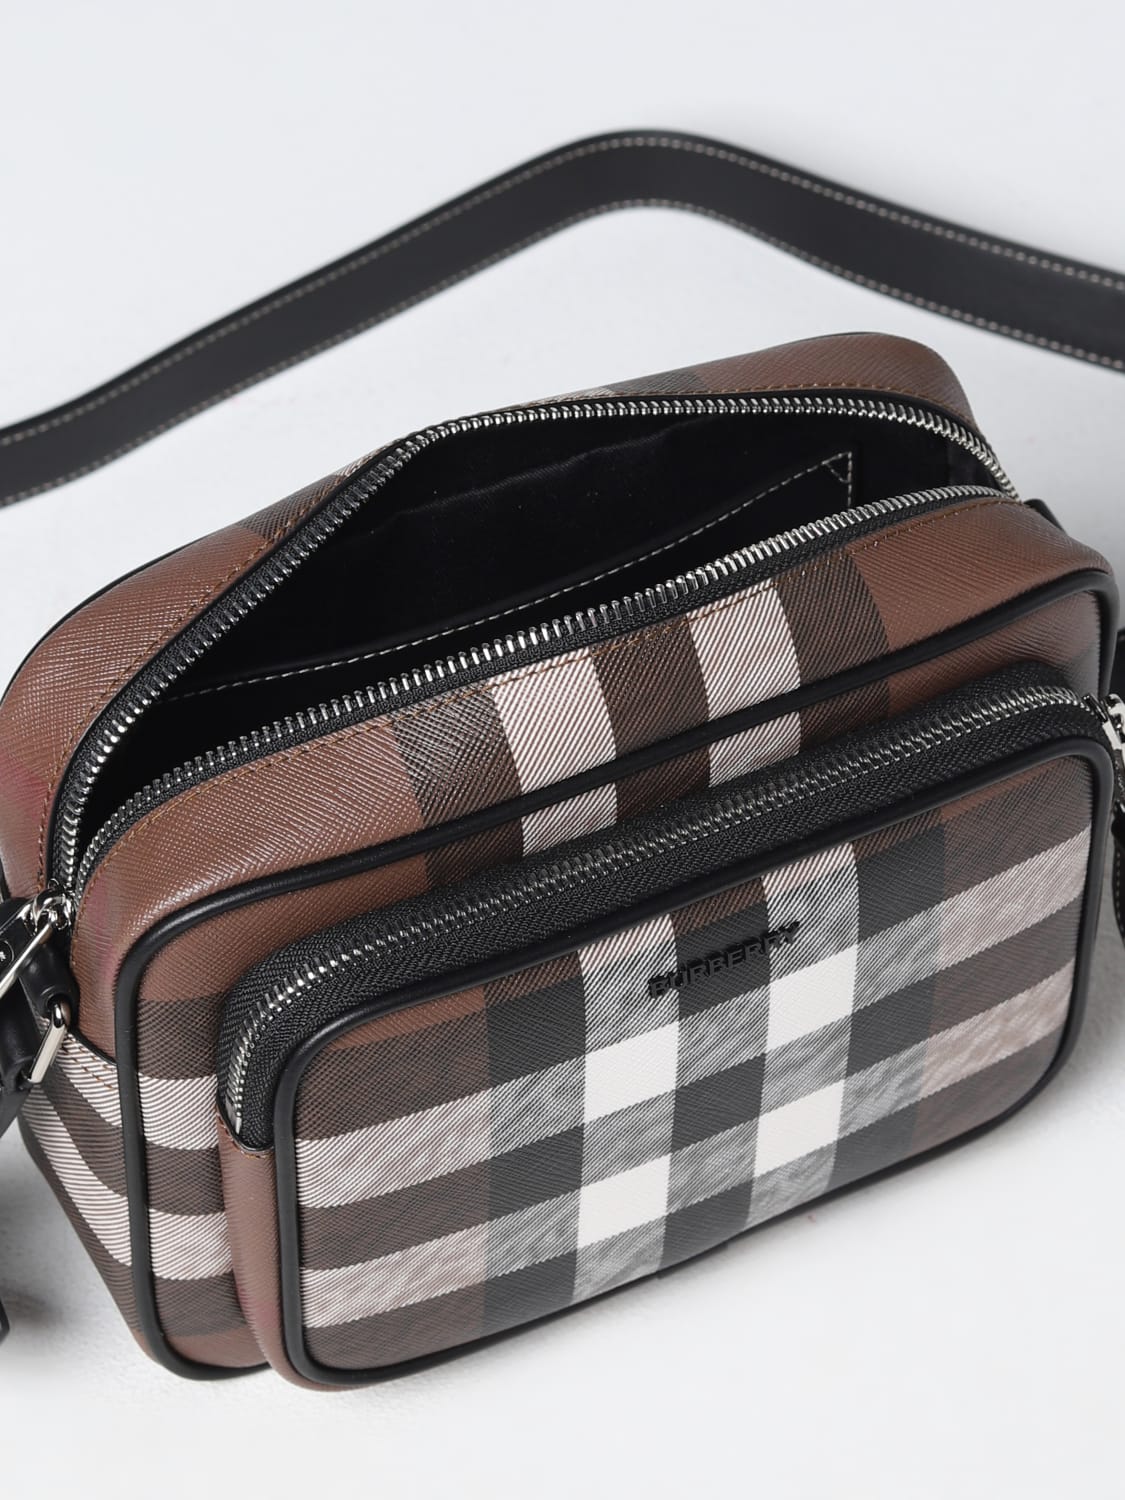 Brown Woven Checker Shoulder Bag